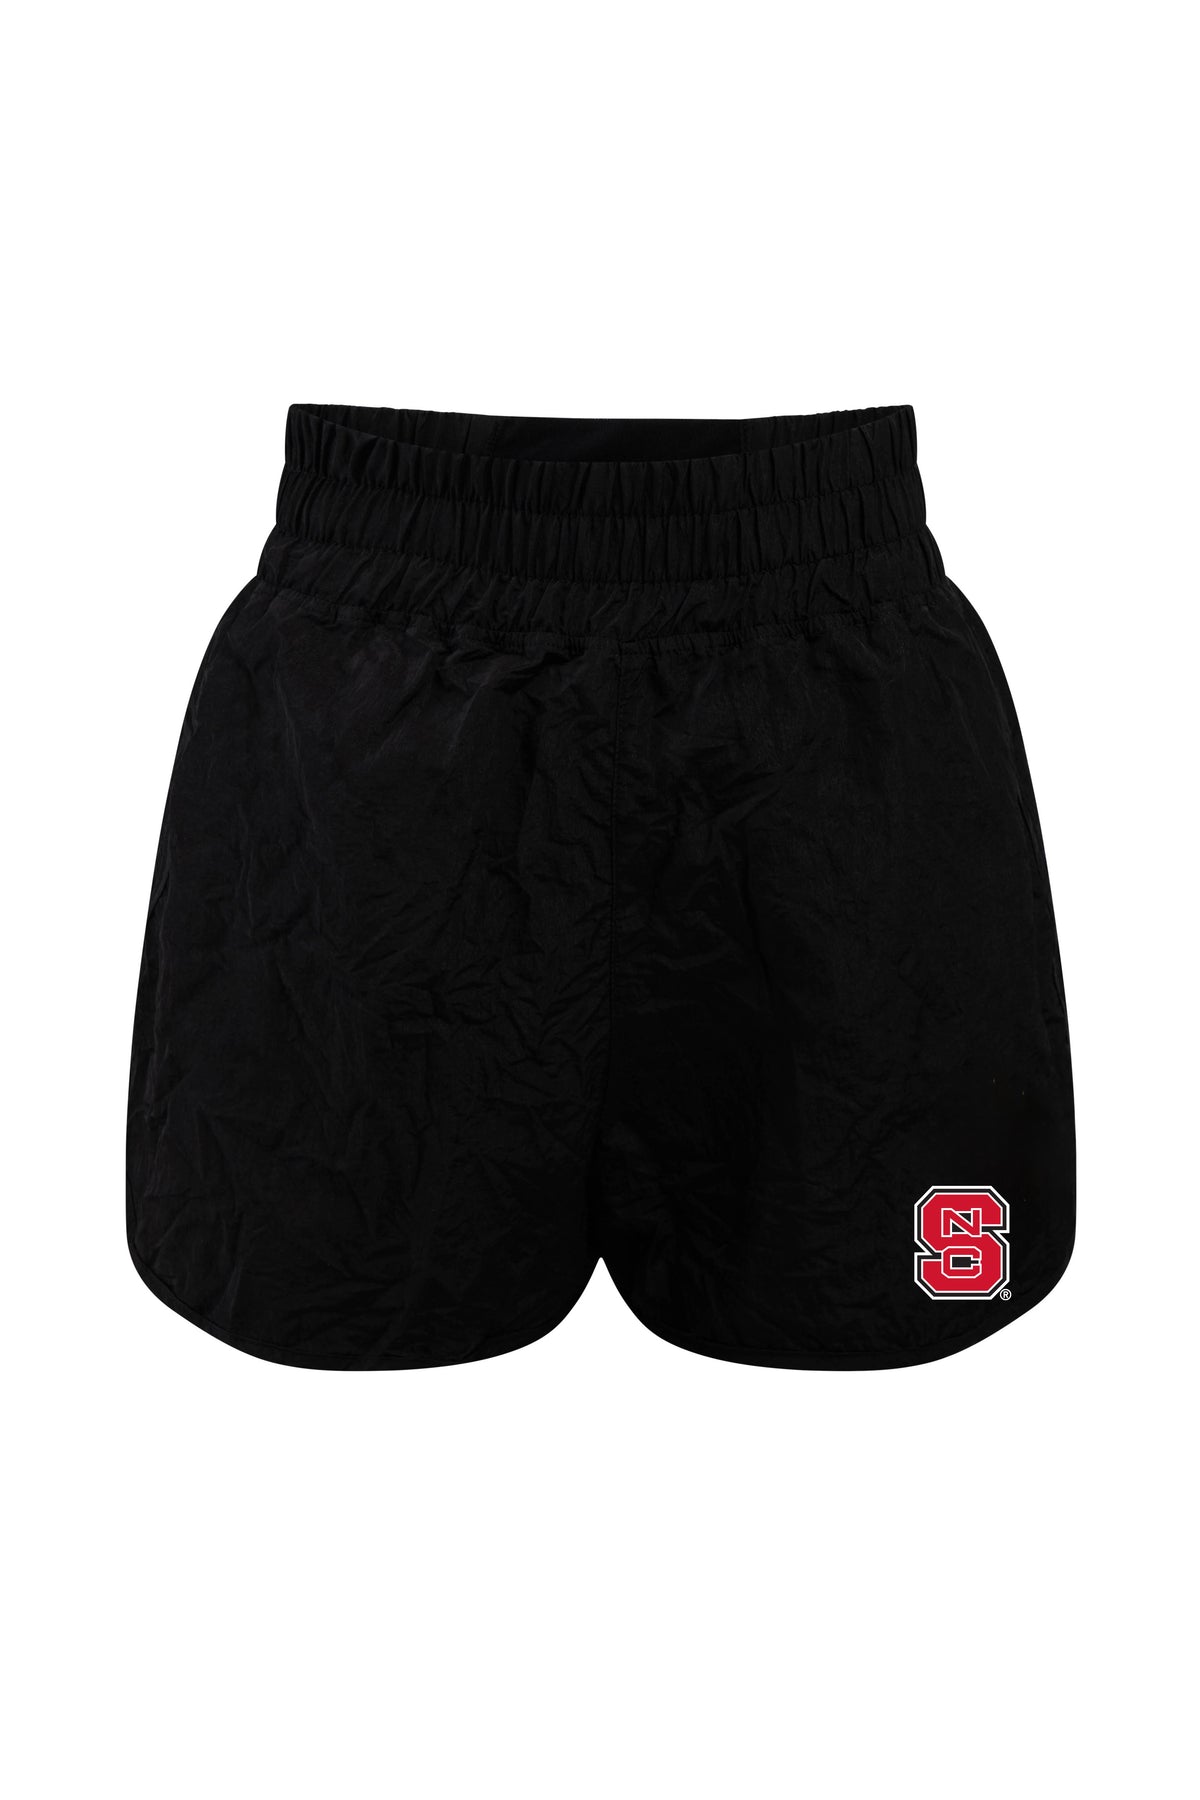 North Carolina State University Boxer Short